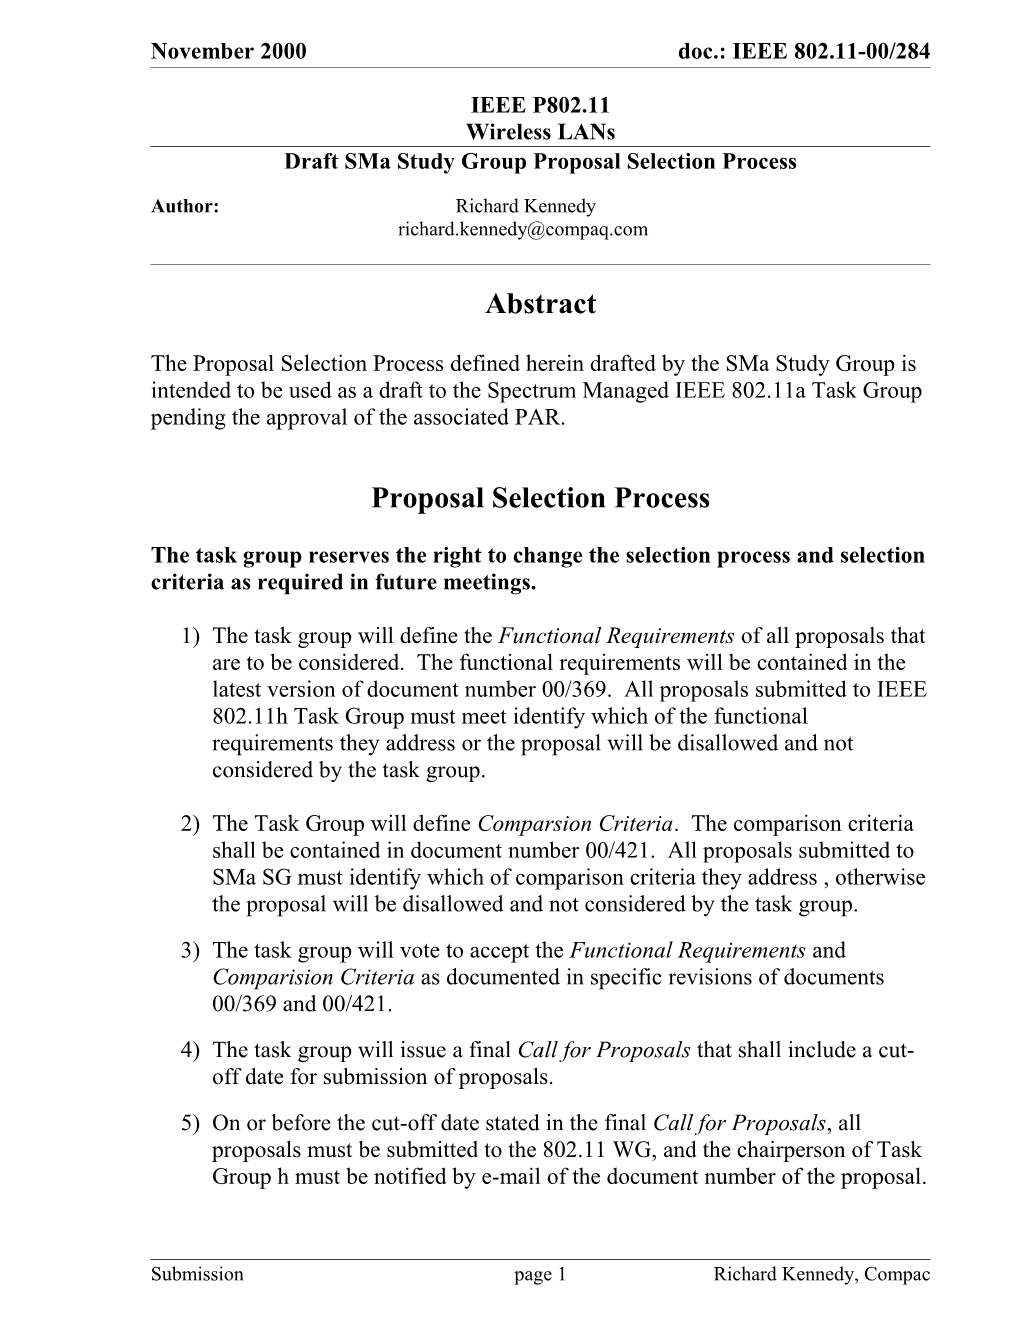 Draft Sma Study Group Proposal Selection Process